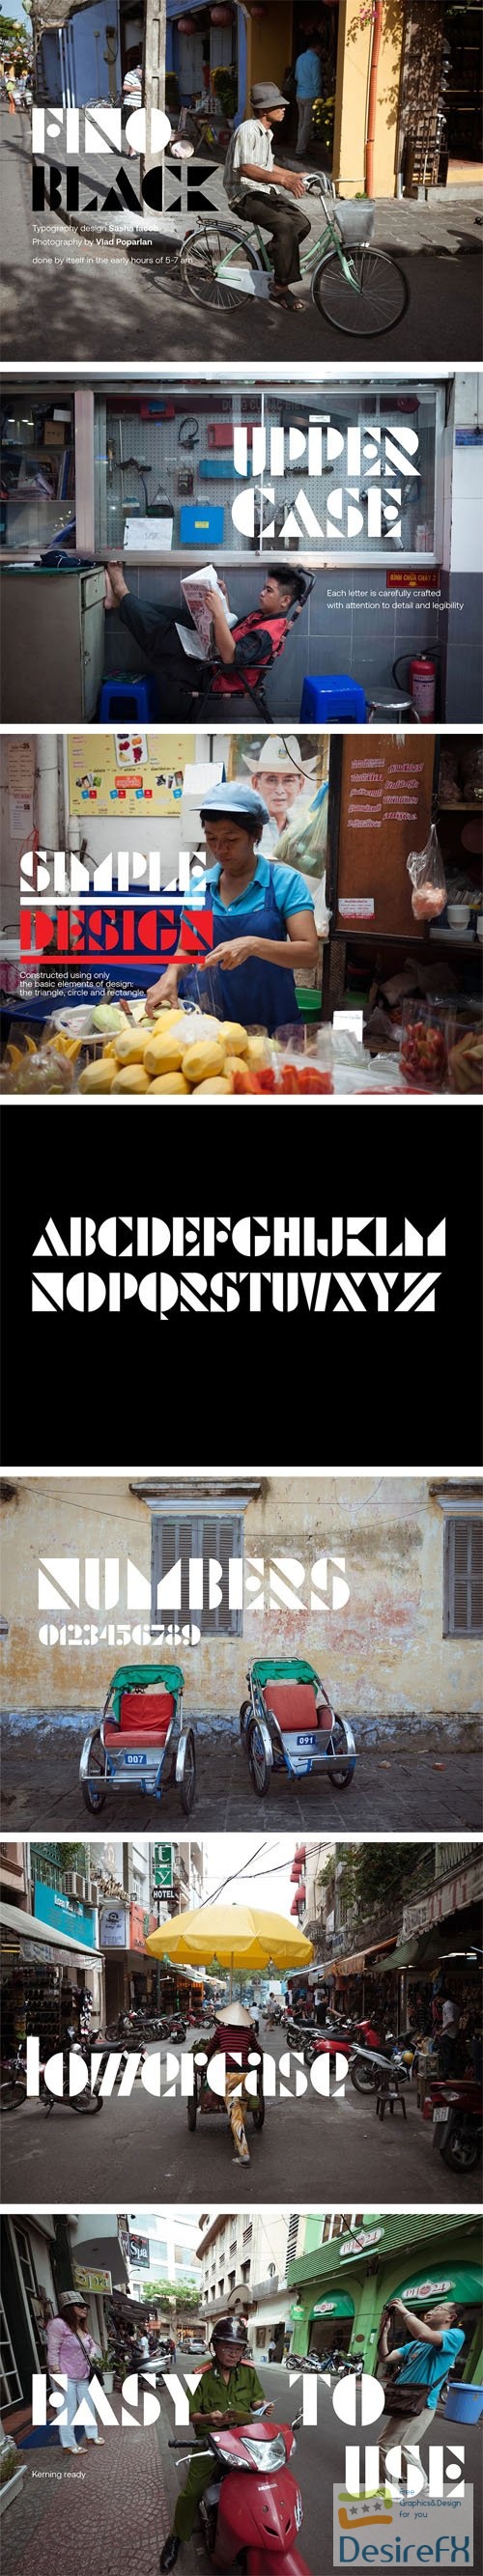 Fino Black - Display Typeface